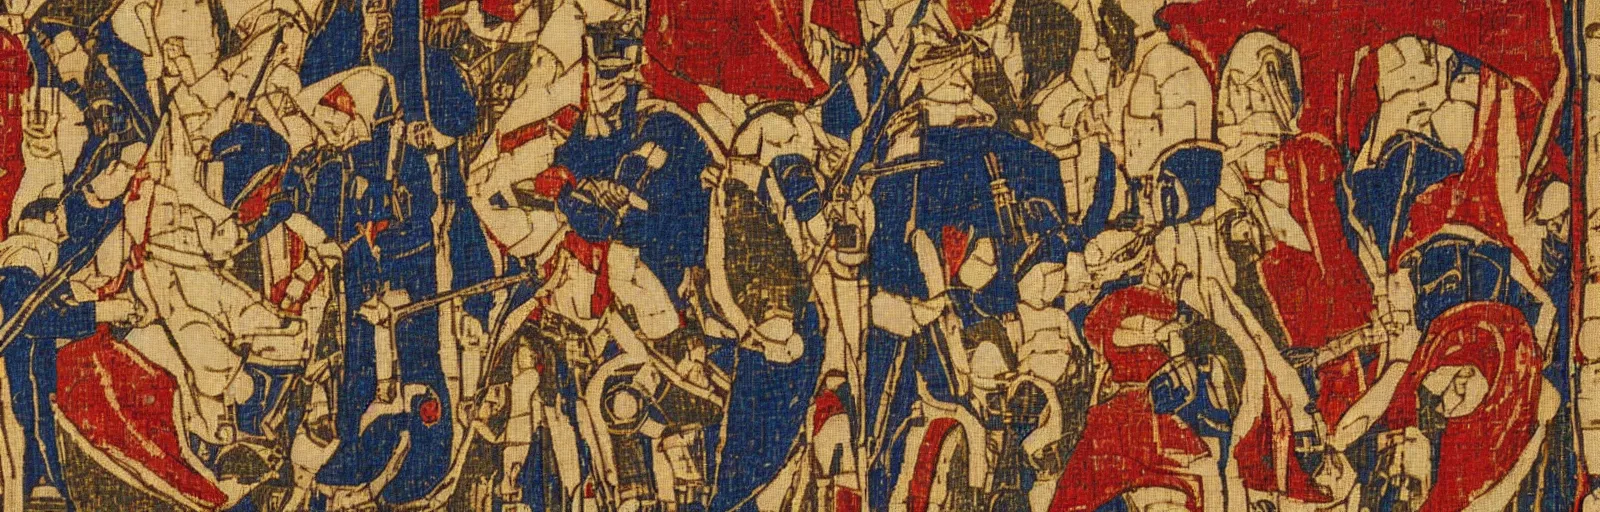 Image similar to a medieval tapestry depicting the star wars saga